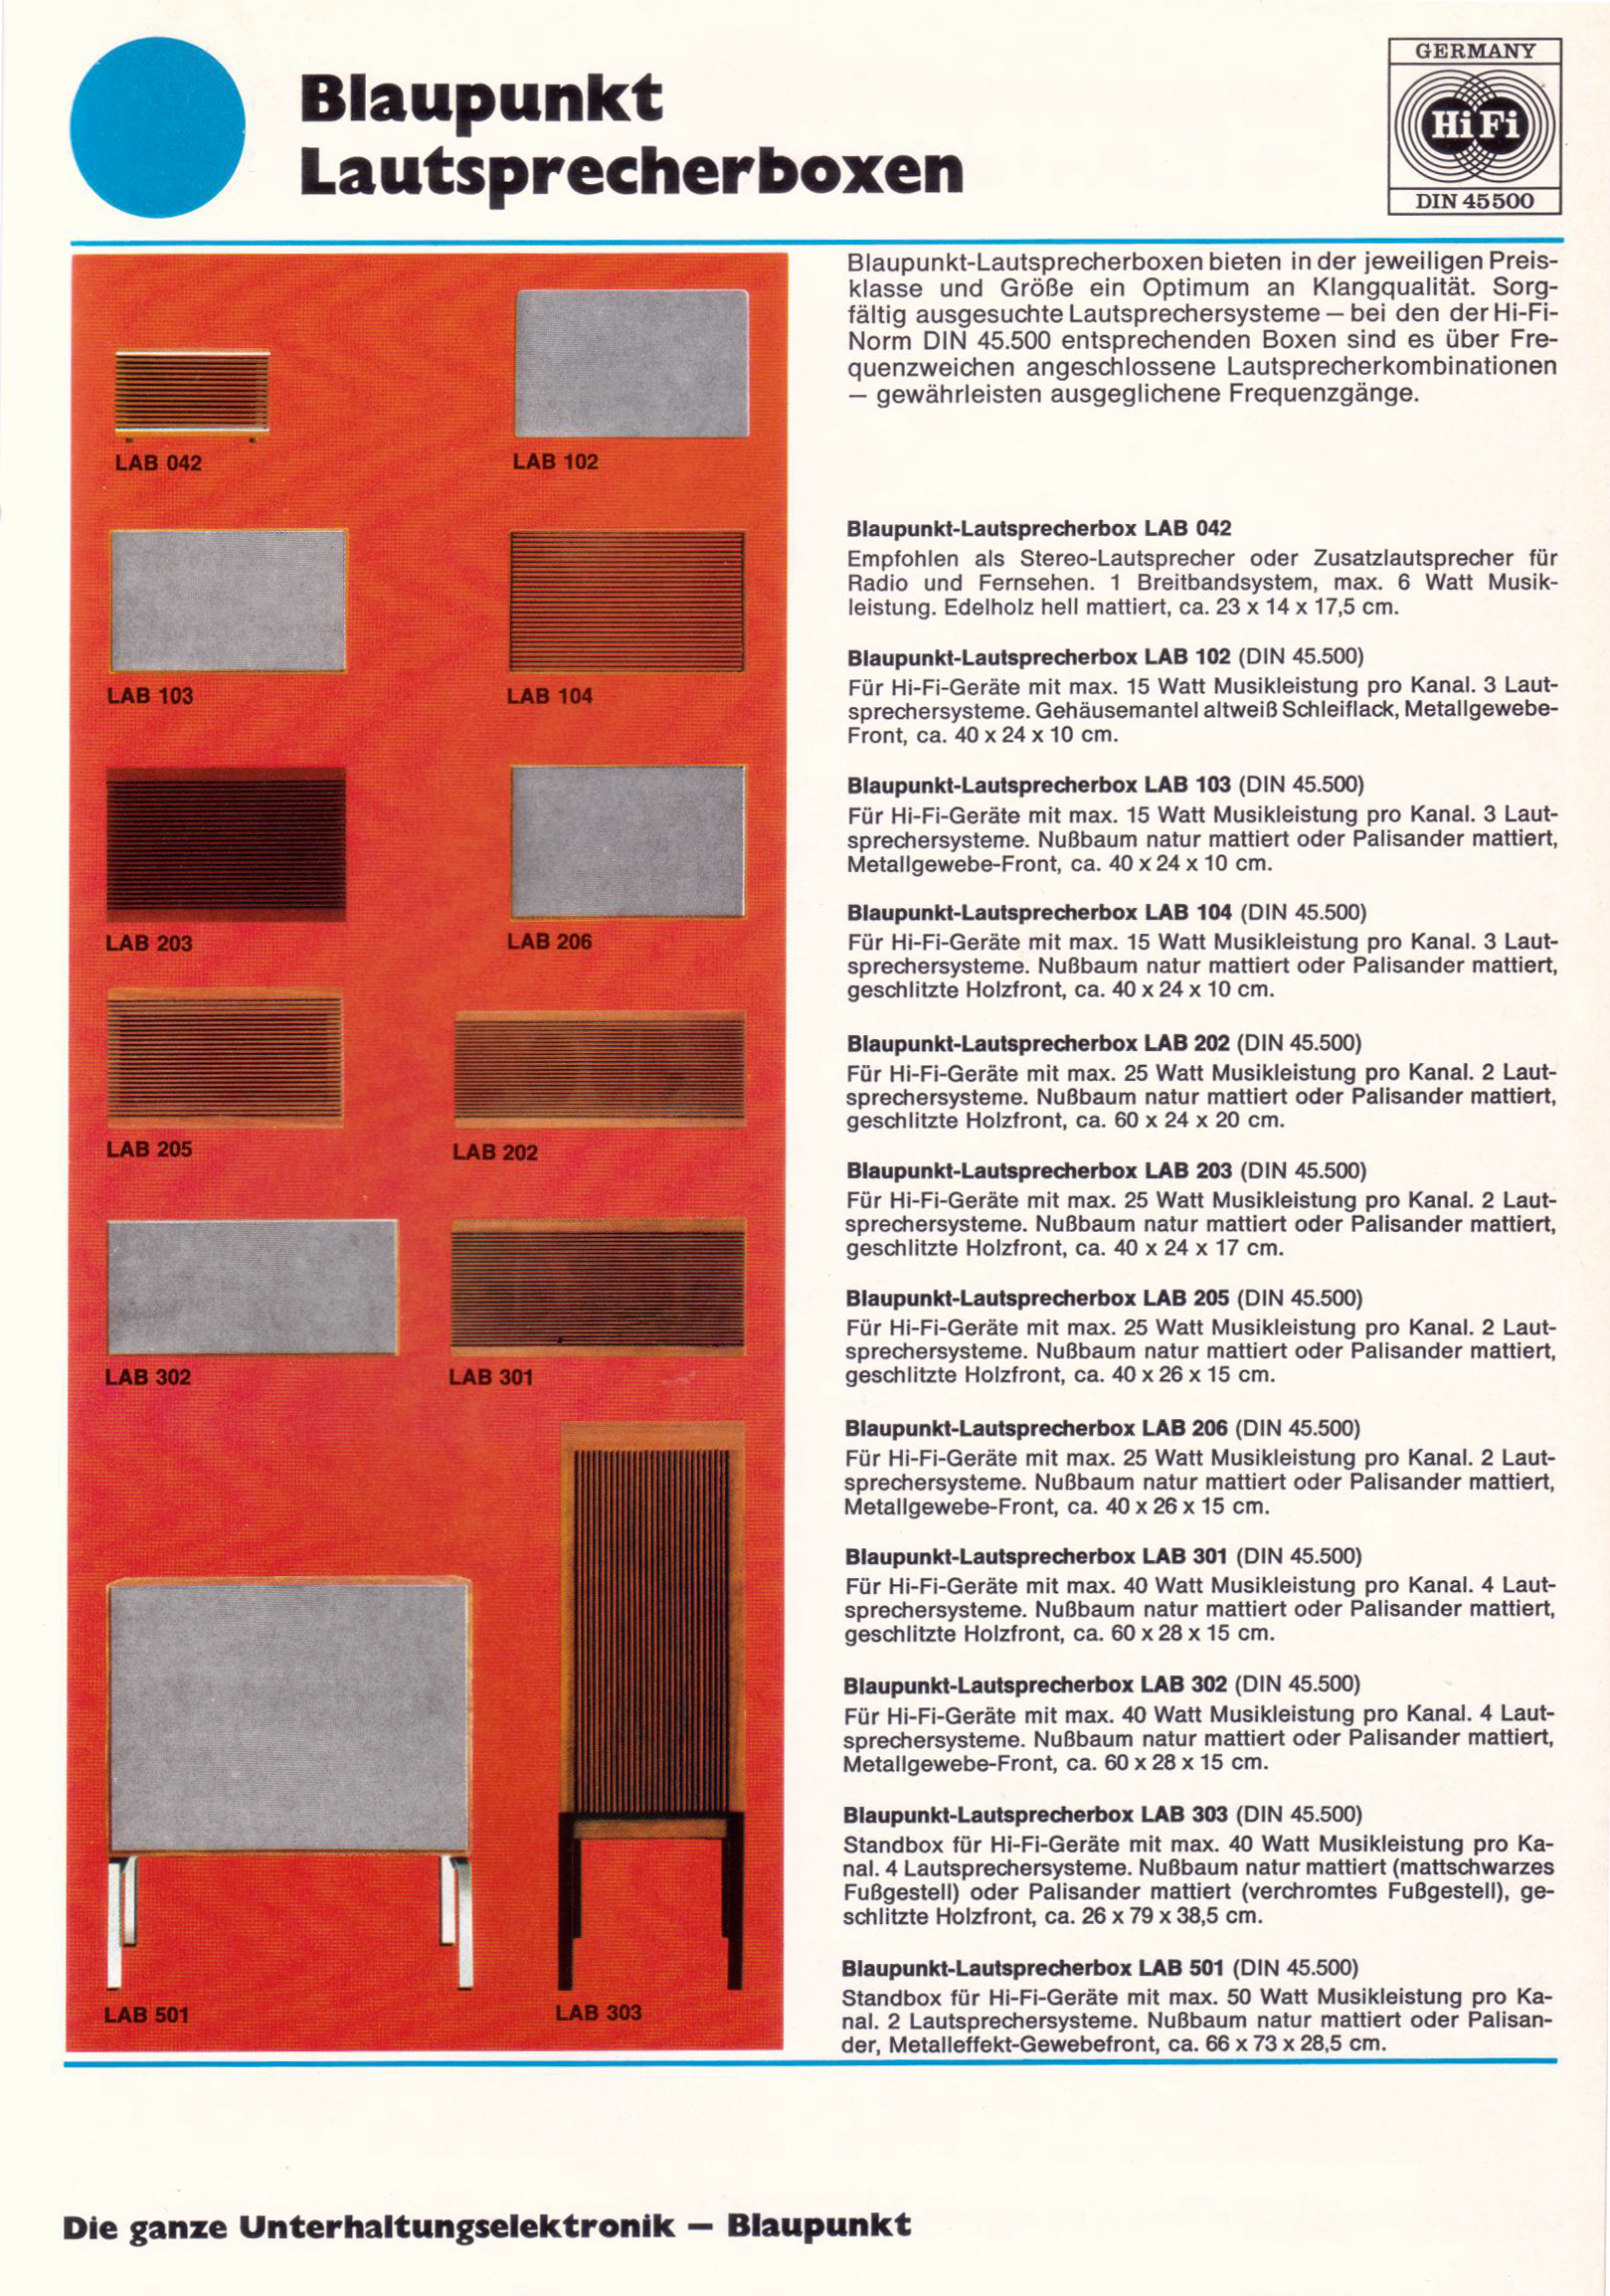 Blaupunkt LAB- Daten-1969.jpg